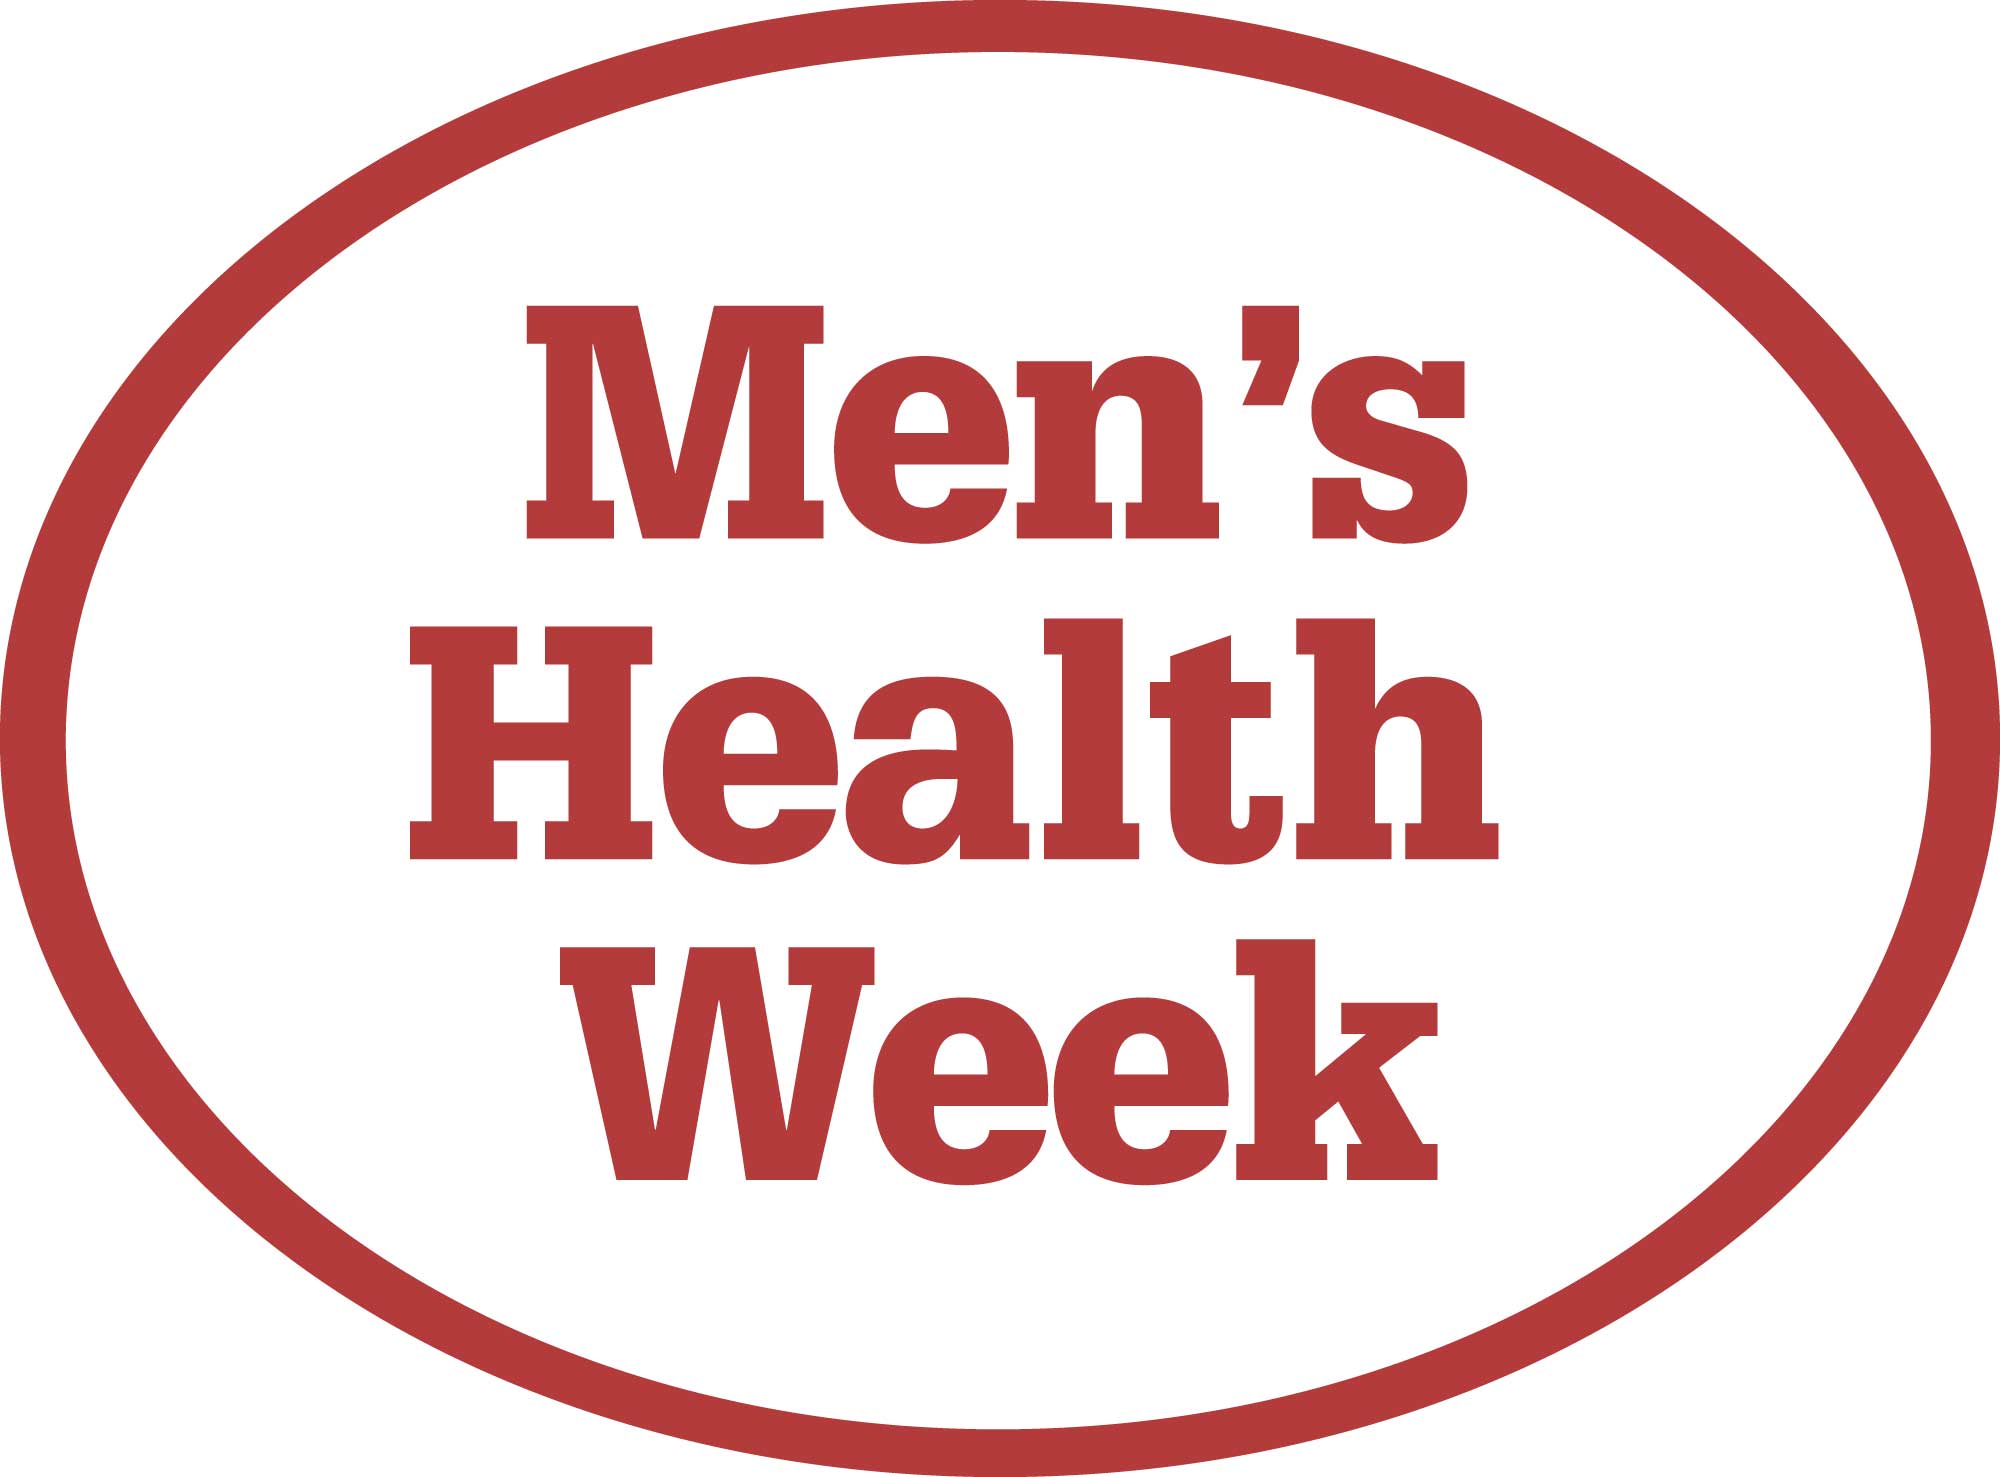 Men's Health Logo - Men's Health Week